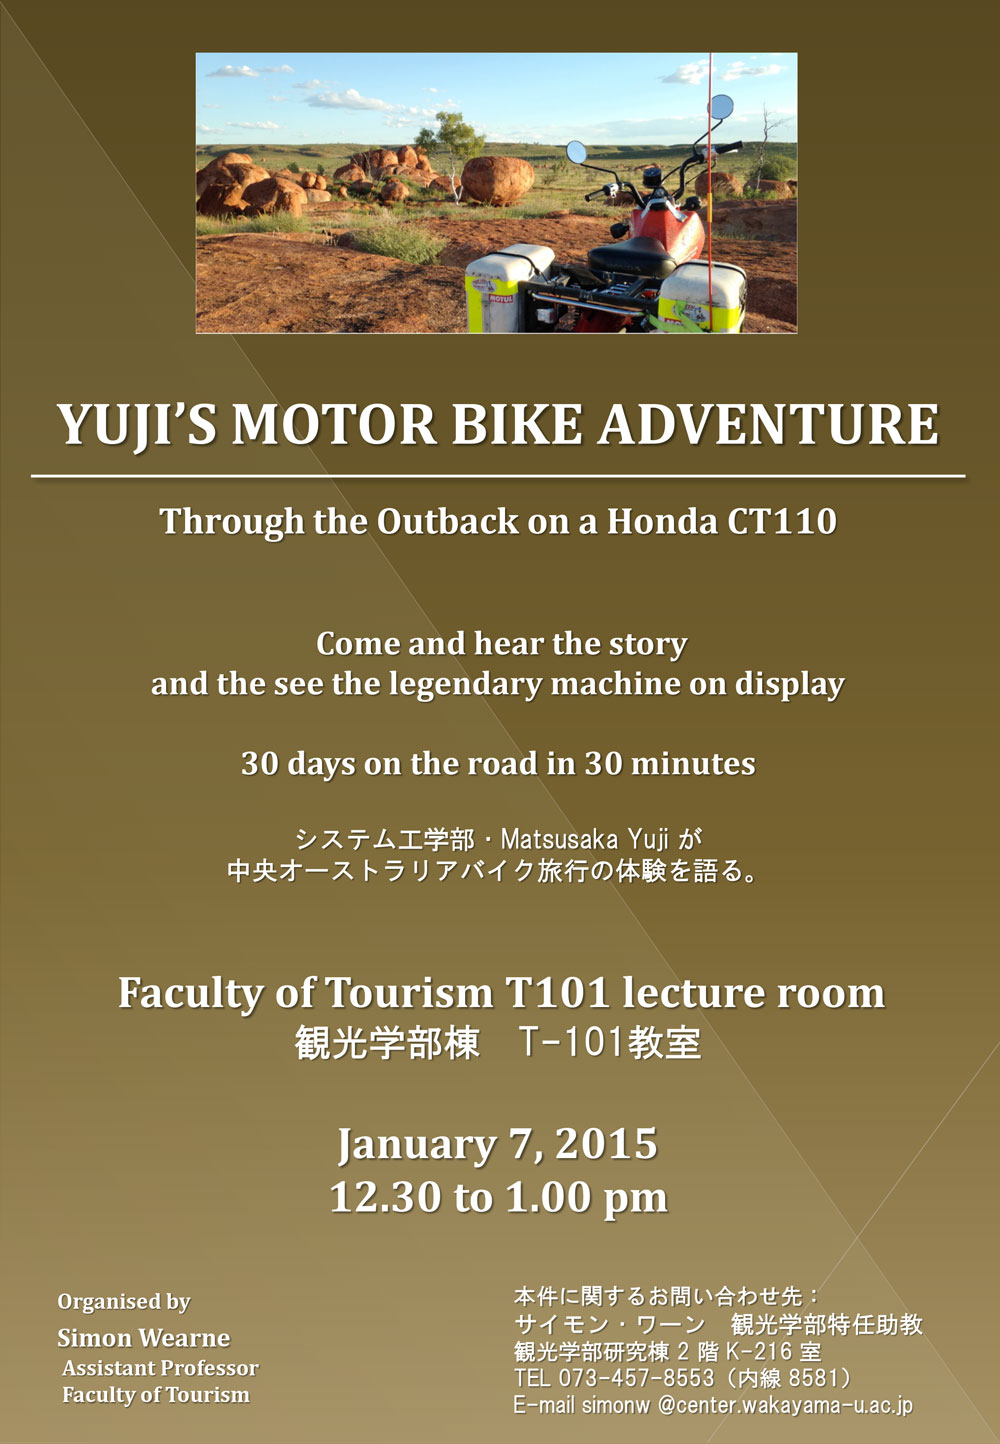 yuji_motor_bike_adventure20150107.jpg